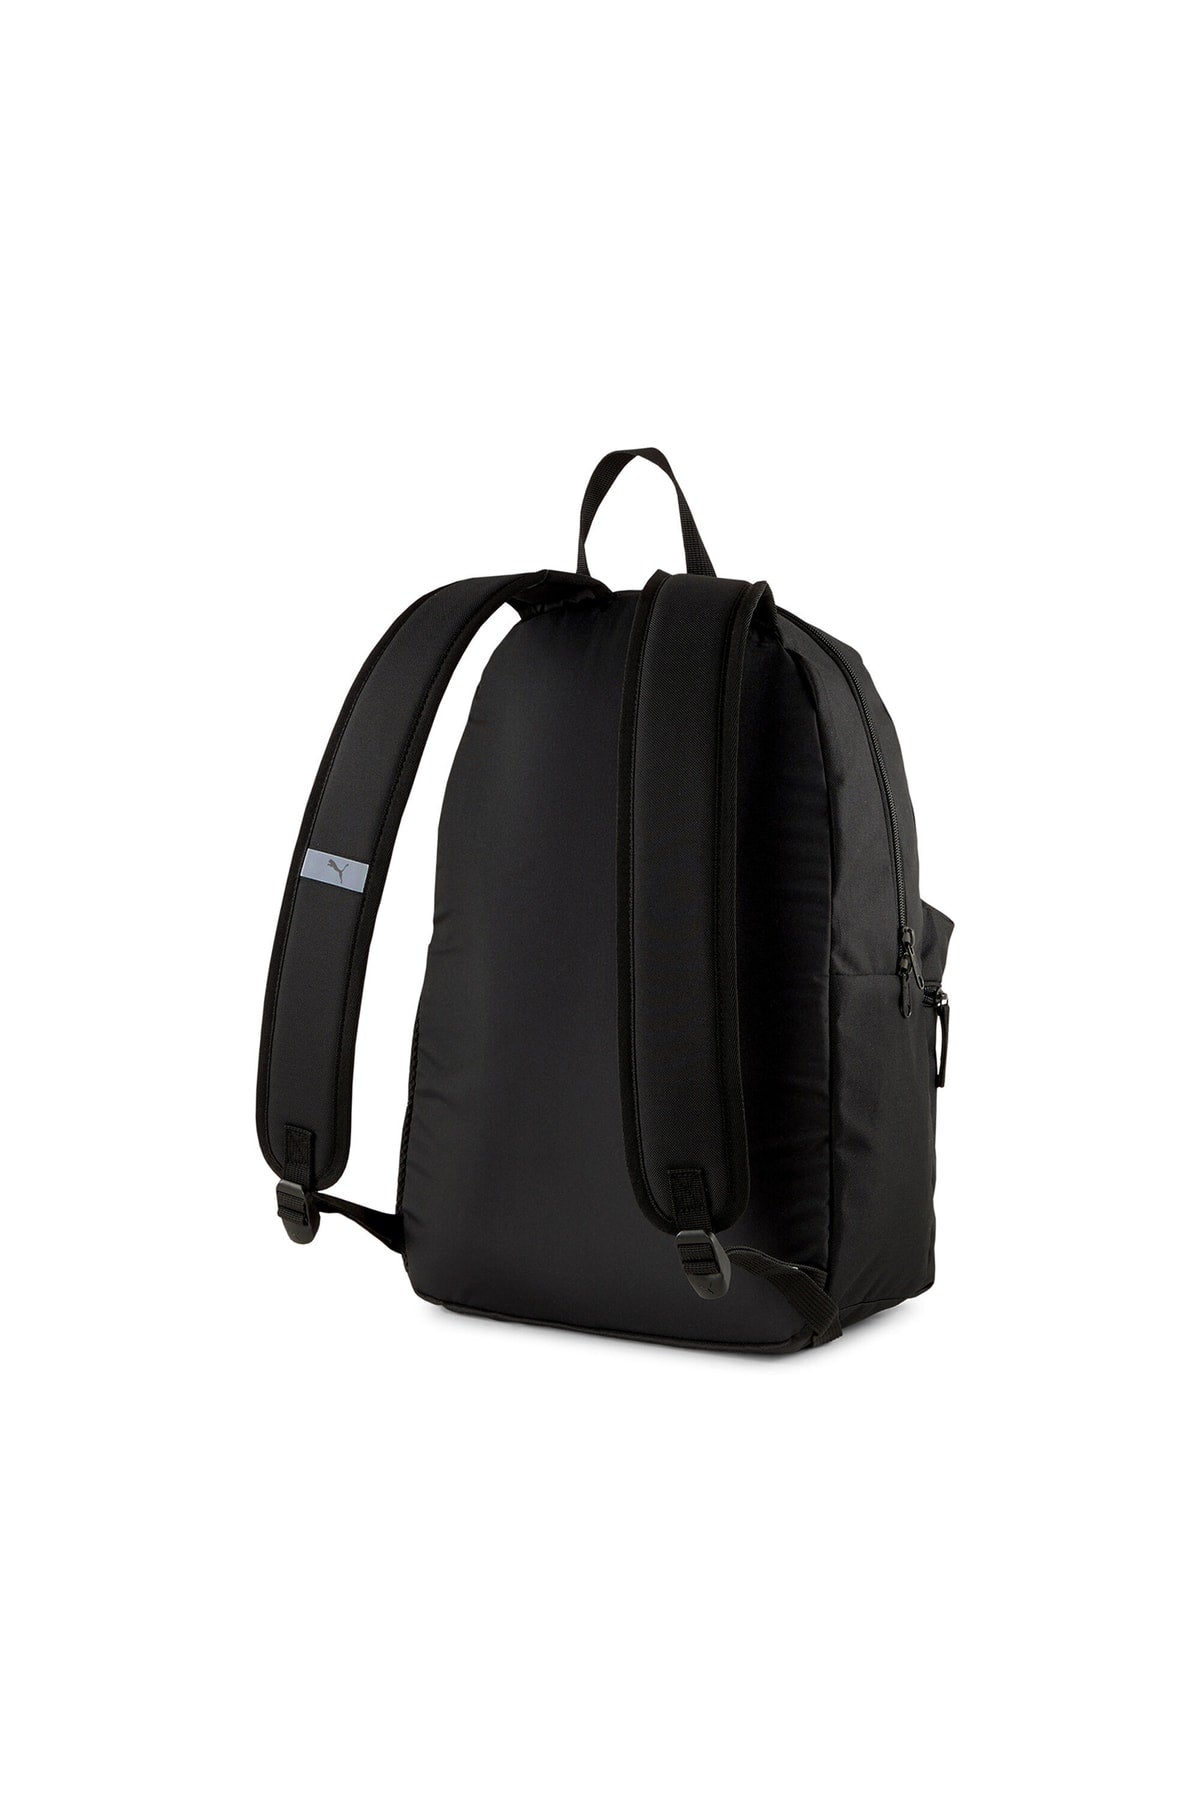 Phase Backpack - Unisex Black Backpack 44x30x14